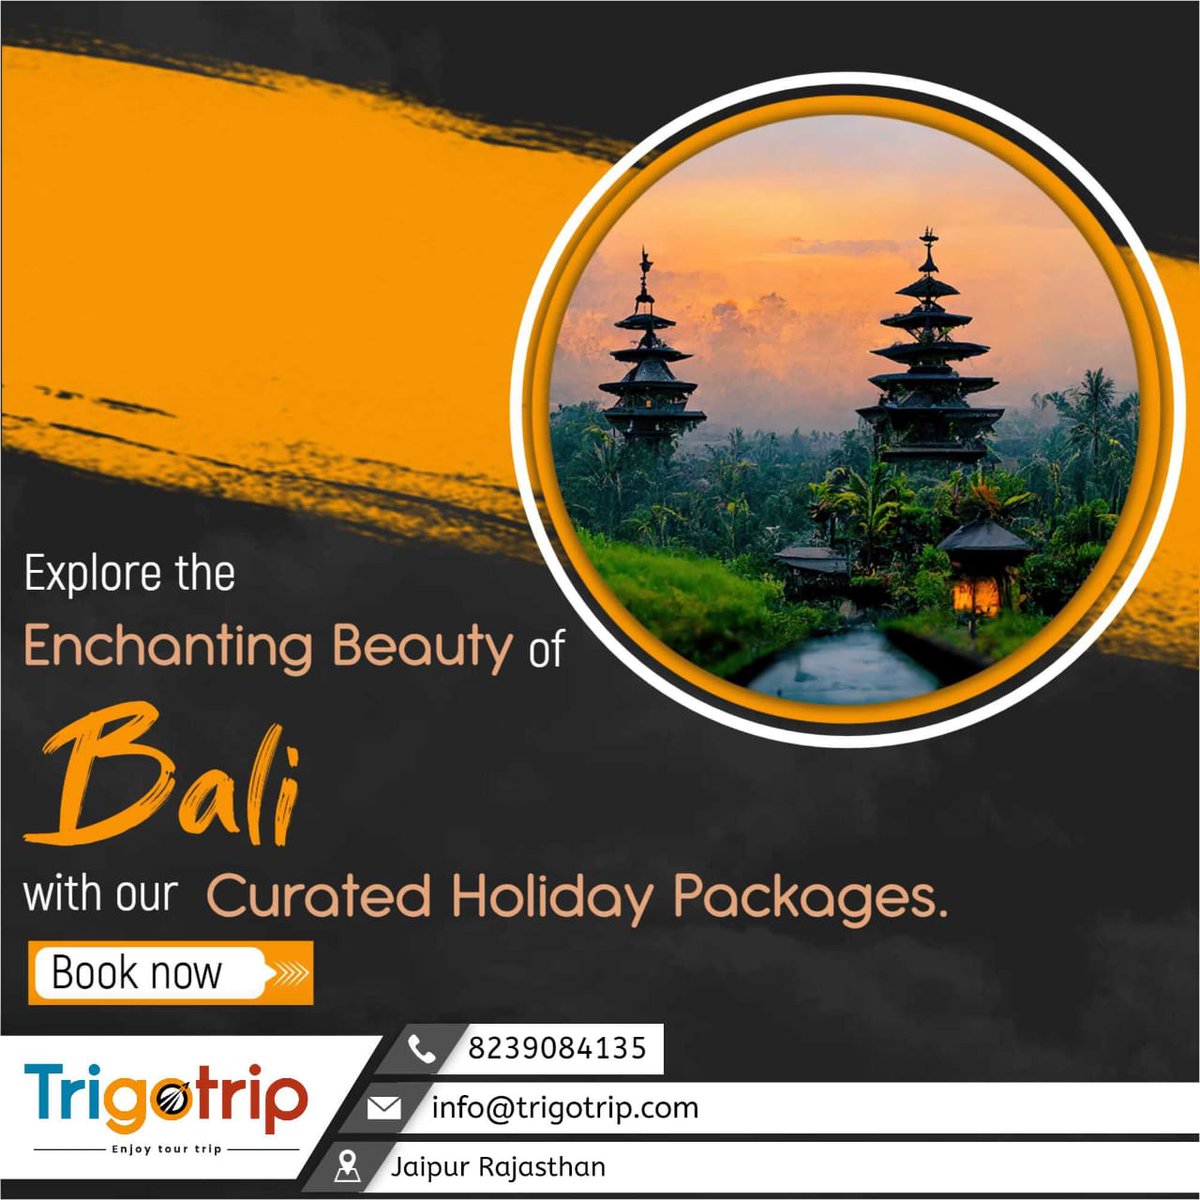 Explore the Enchanting Beauty of Bali: Book Your Bali Tour with Trigotrip!
.
#Bali #ExploreBali #BaliTrip #TravelBali #Indonesia #Ubud #kintamanitour #nusadua #KutaBeach #NusaPenida #tanahlot #GiliIslands #BaliSunset #git_git_waterfall #kuberatvride #TempleHopping #trigotrip